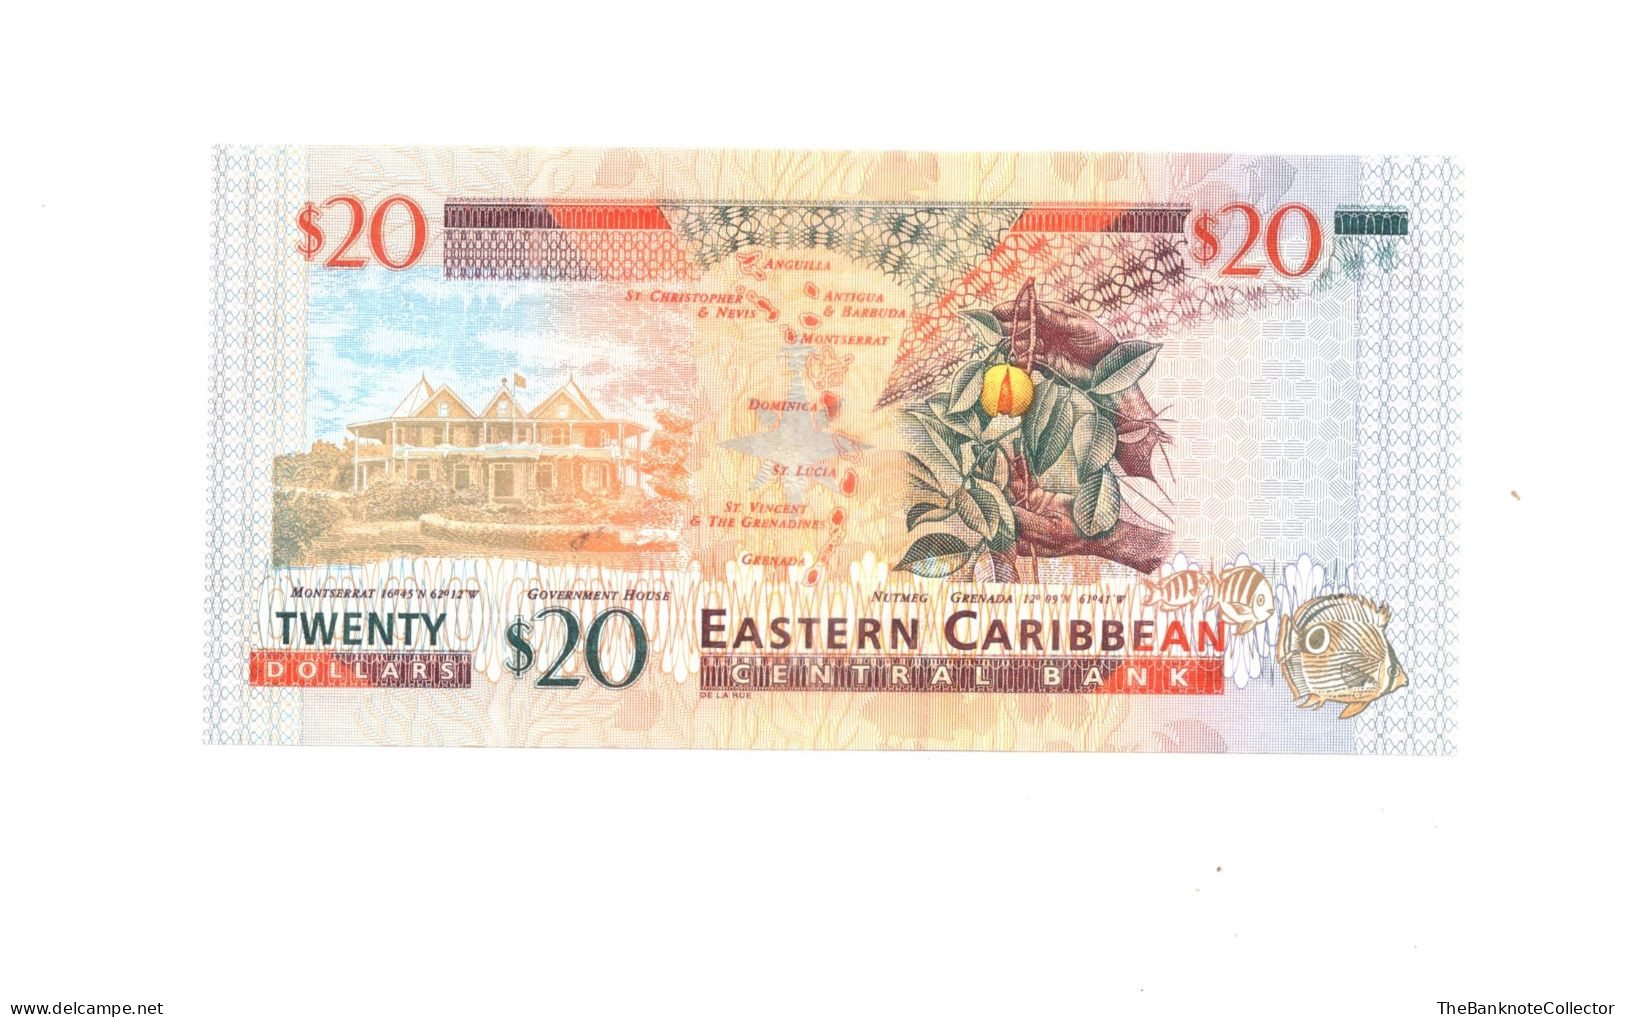 Eastern Caribbean Central Bank 20 Dollars ND 2003 QEII P-44v UNC - Caraibi Orientale